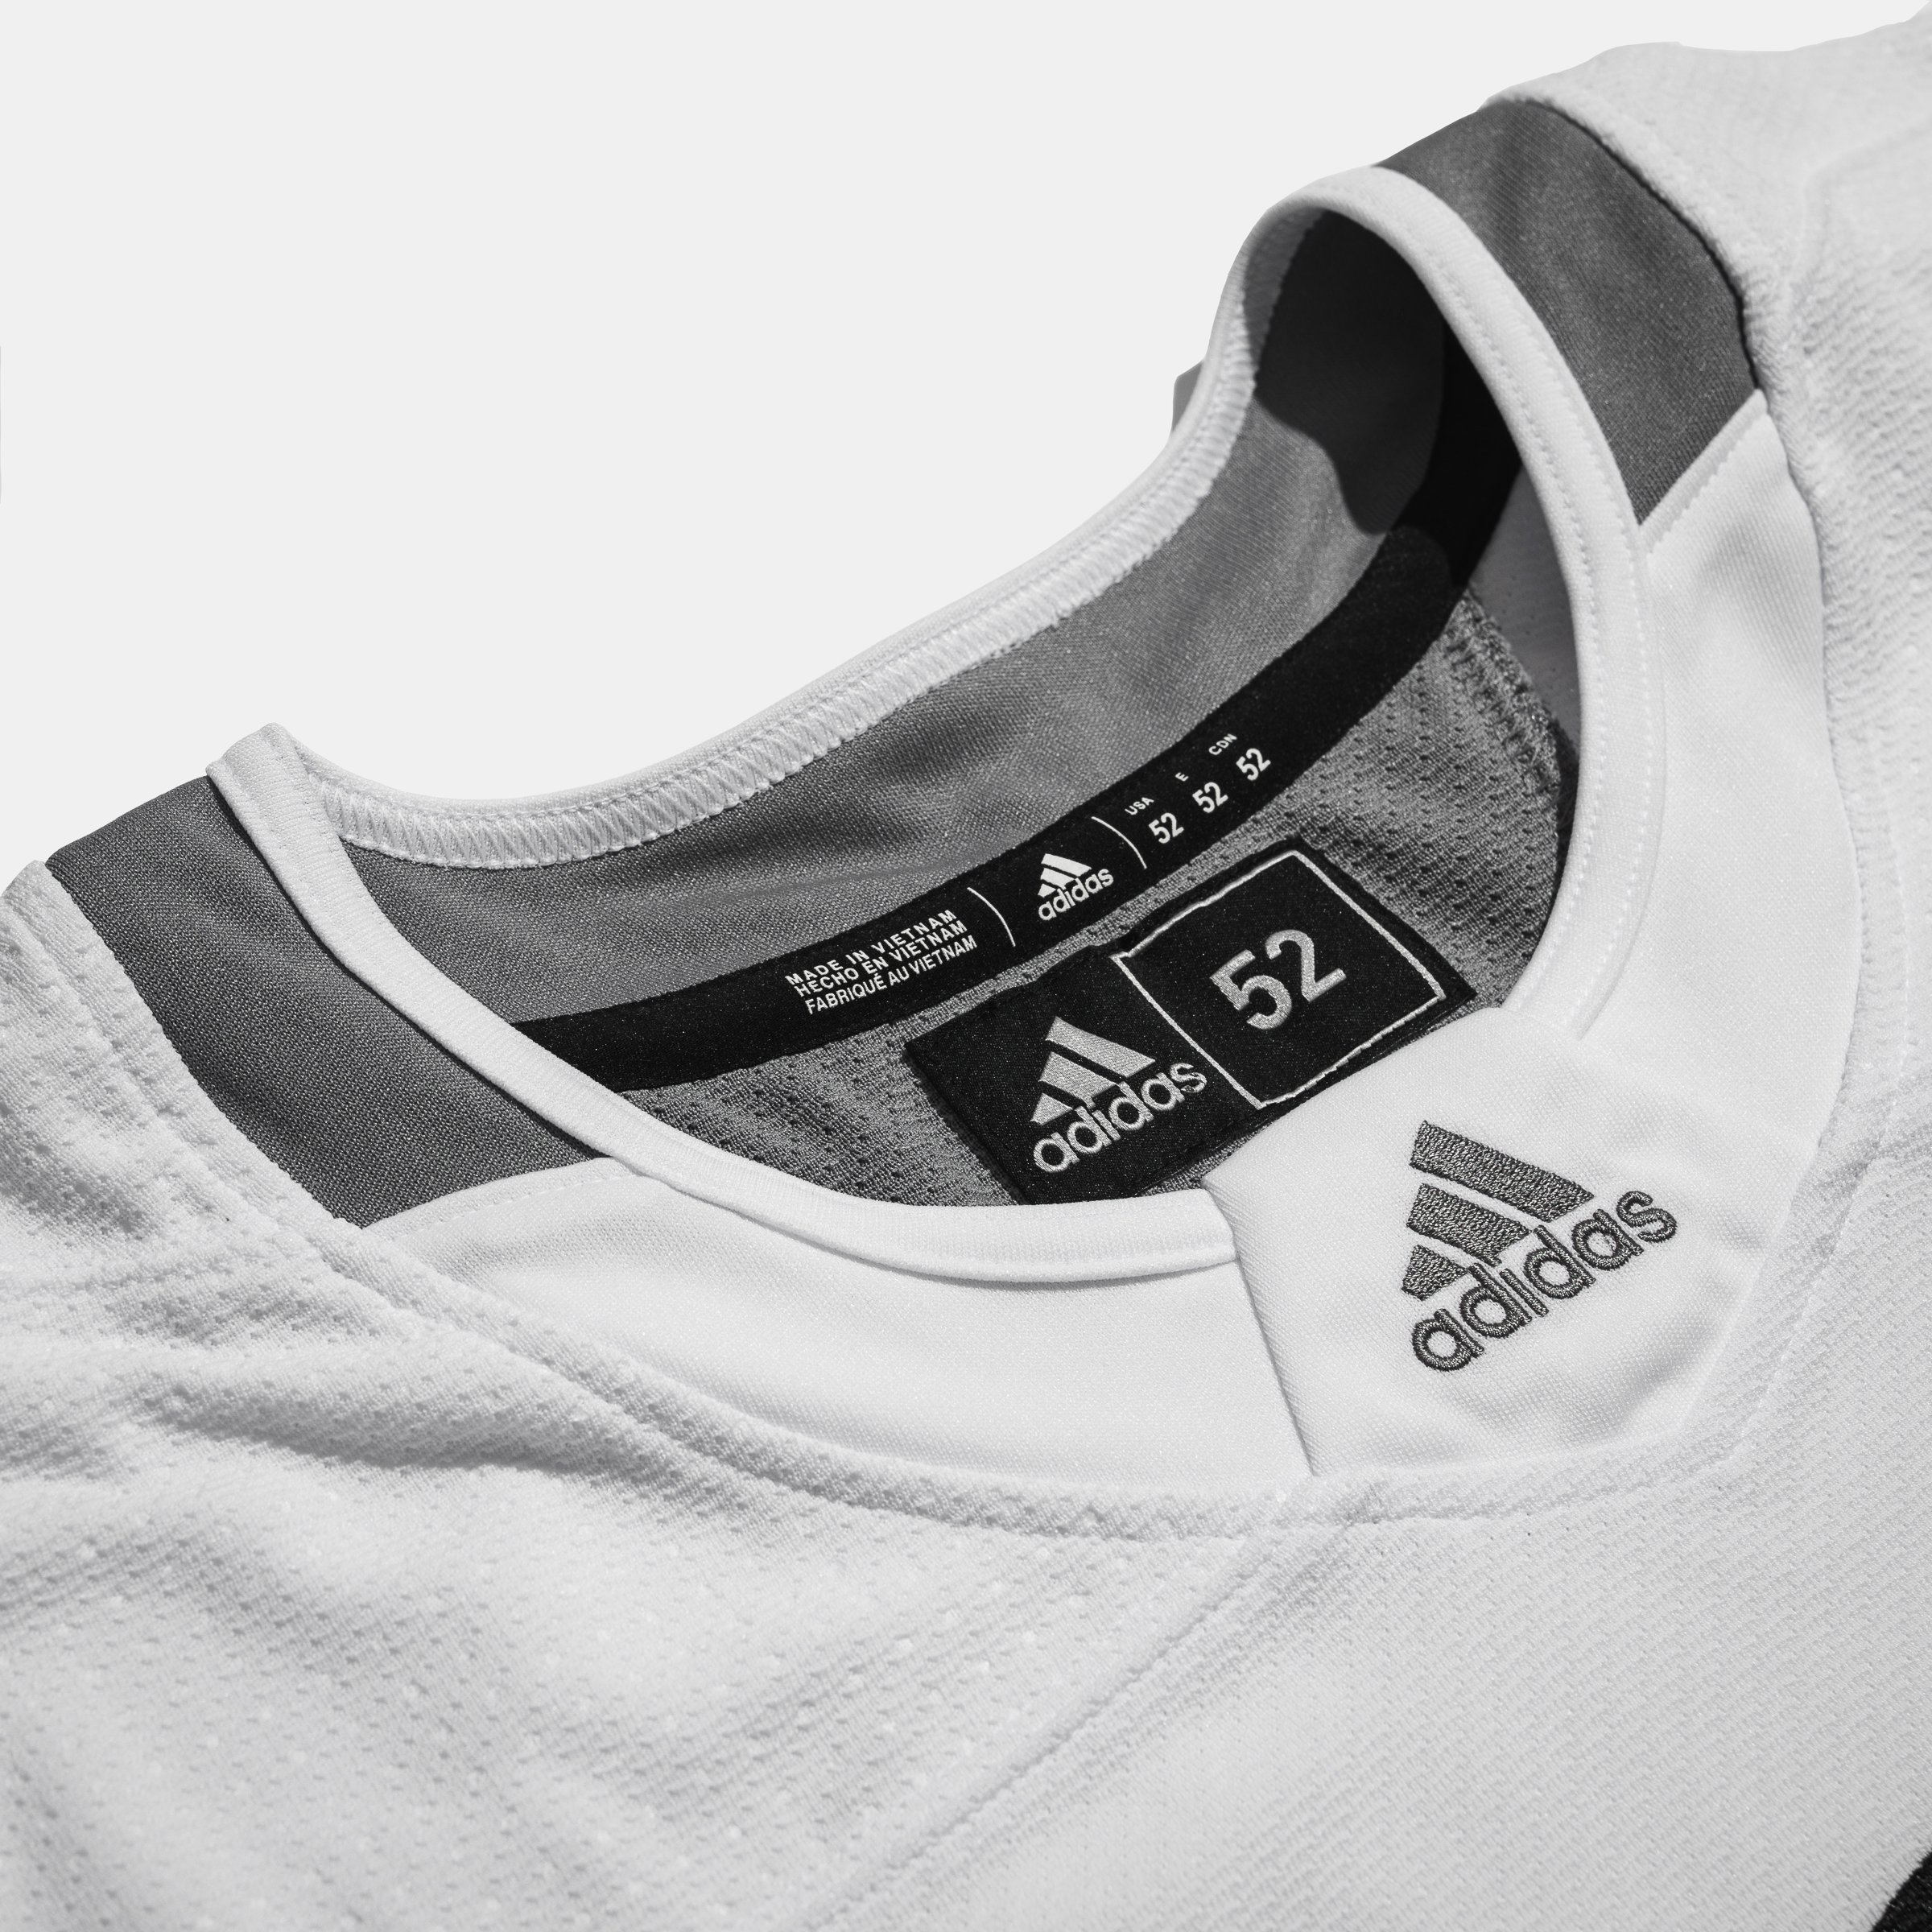 Adidas Practice Jersey - White (02).jpg